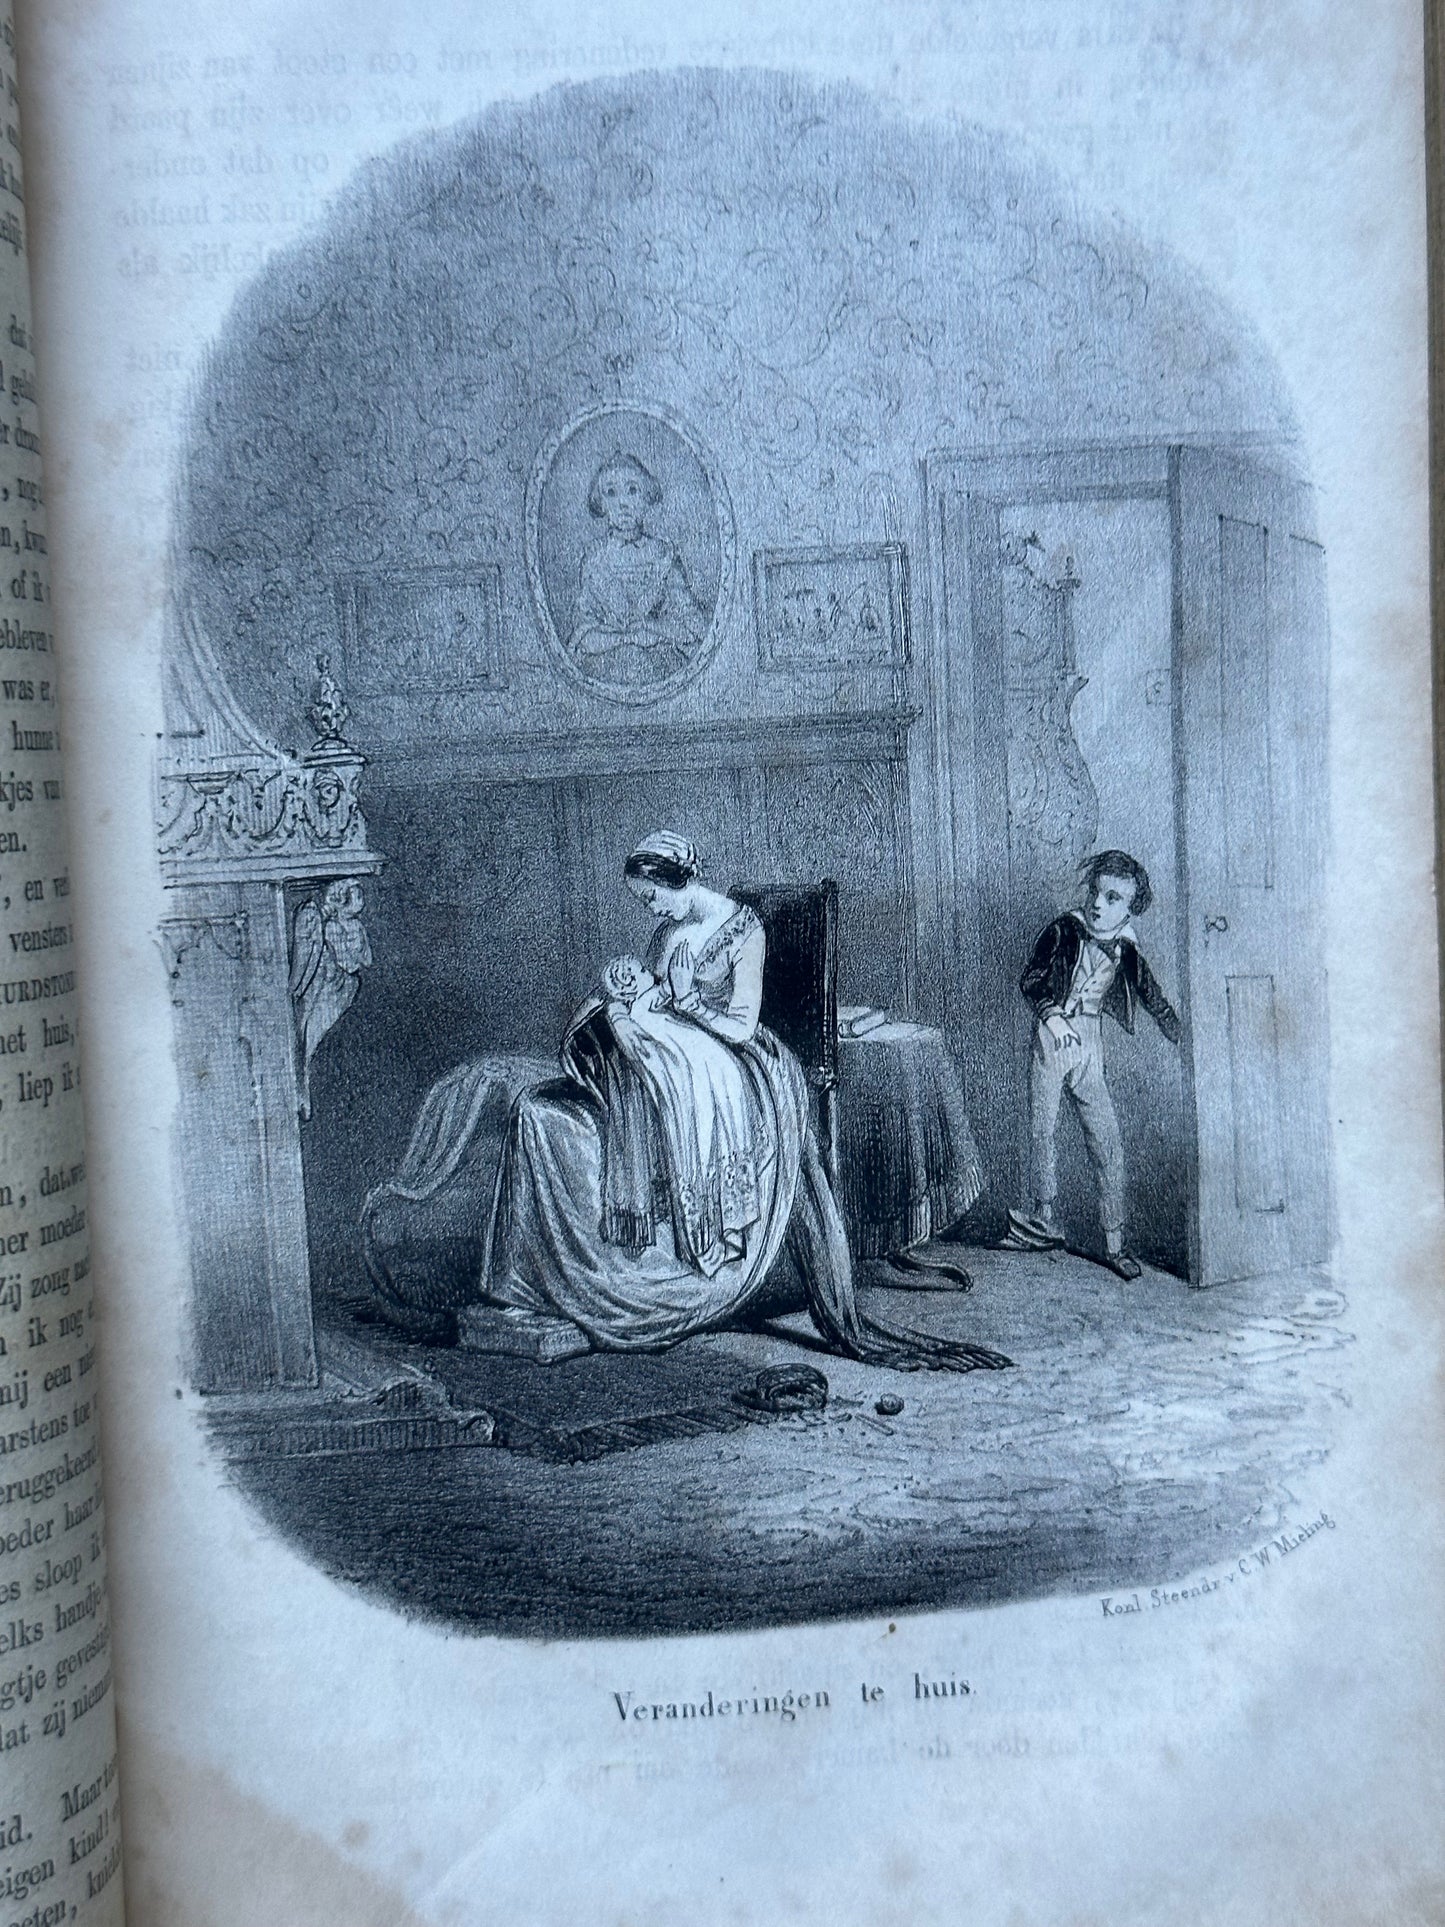 1850 Dutch Edition "David Copperfield"